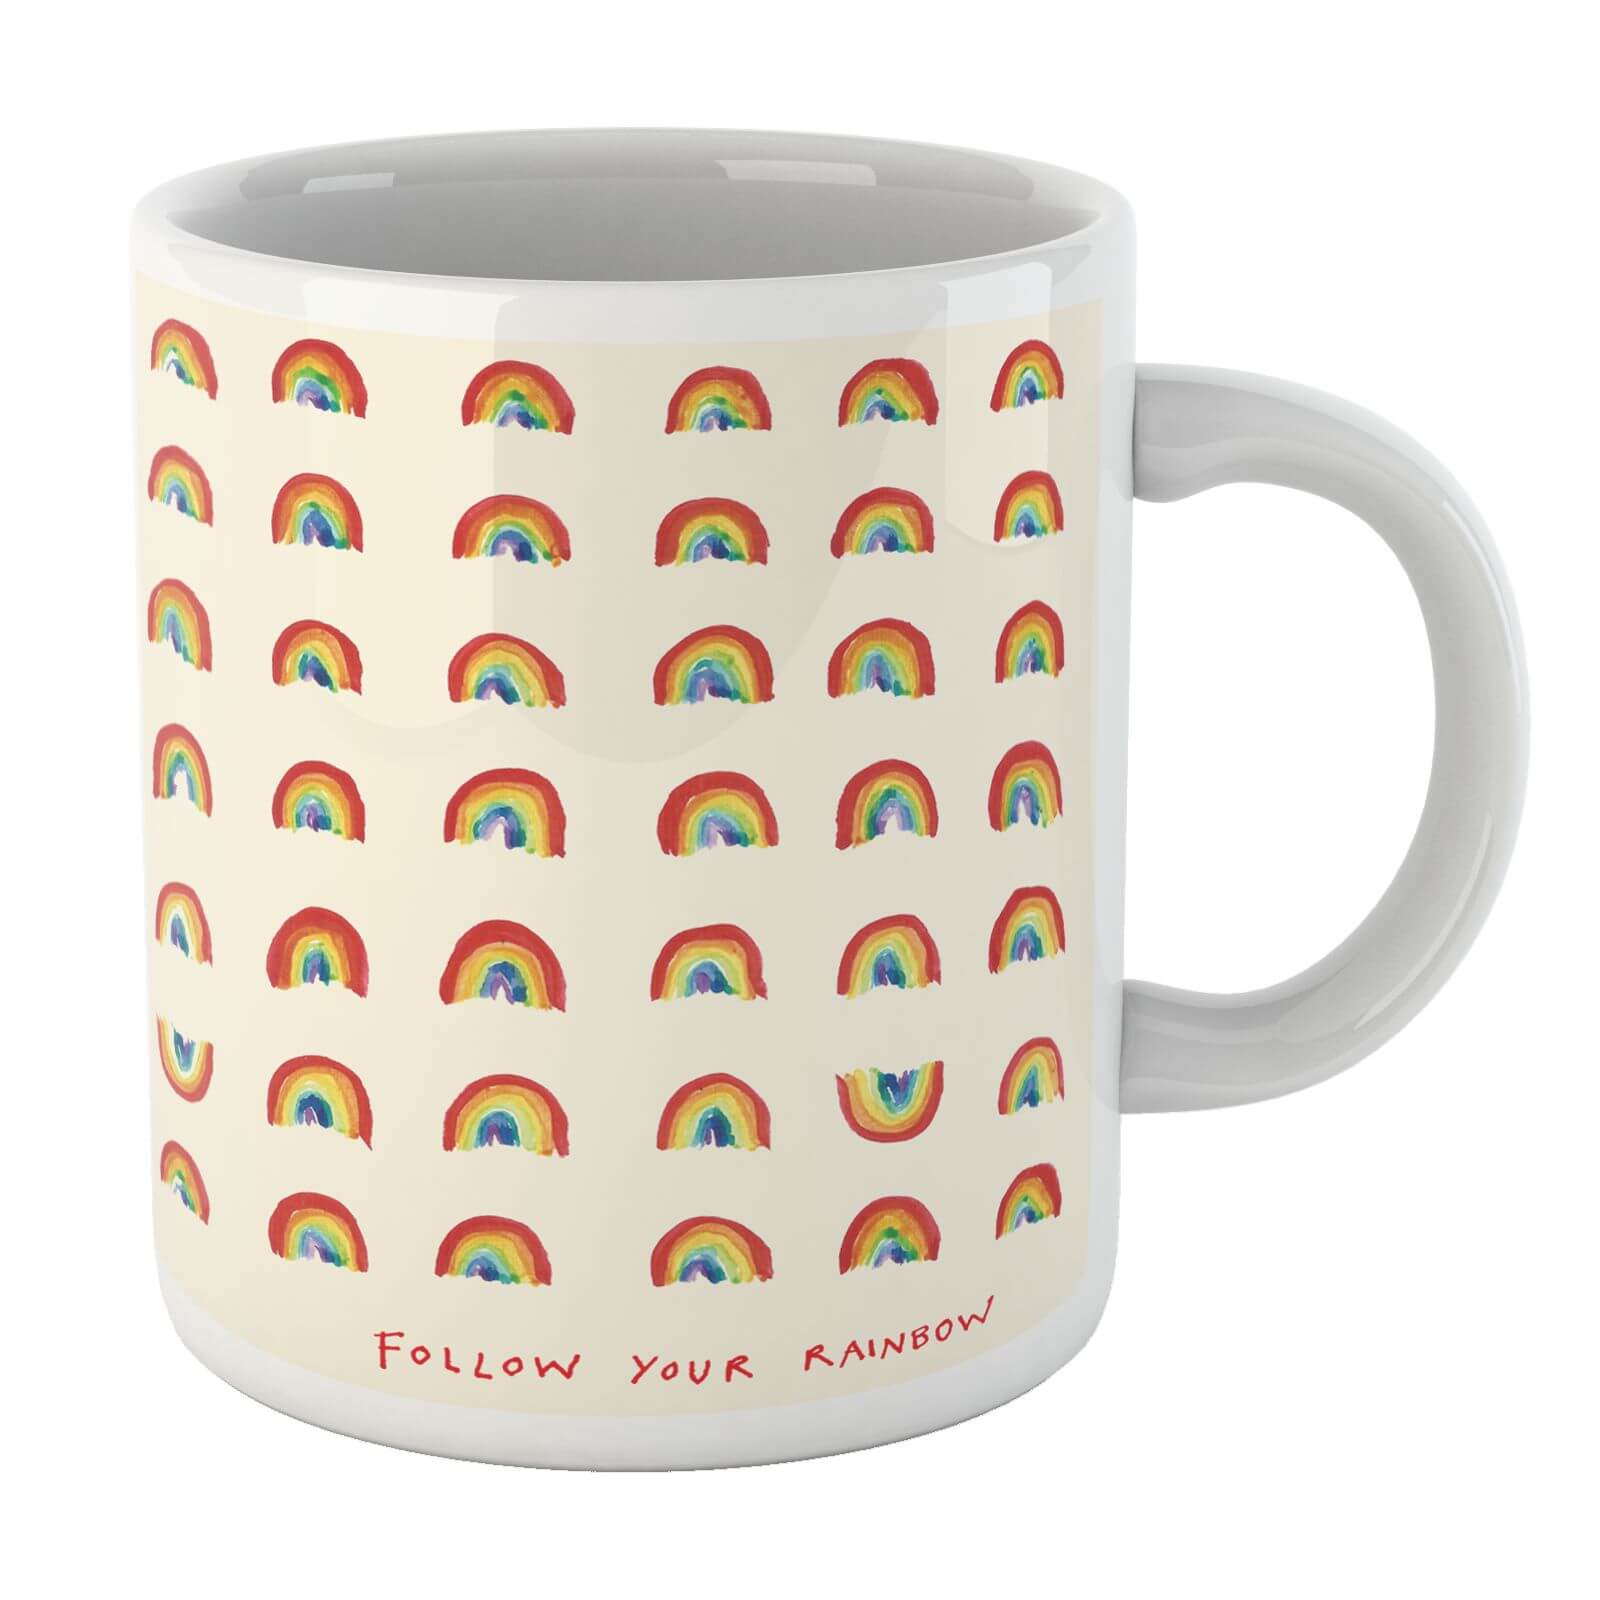 Poet and Painter Follow Your Rainbow Mug